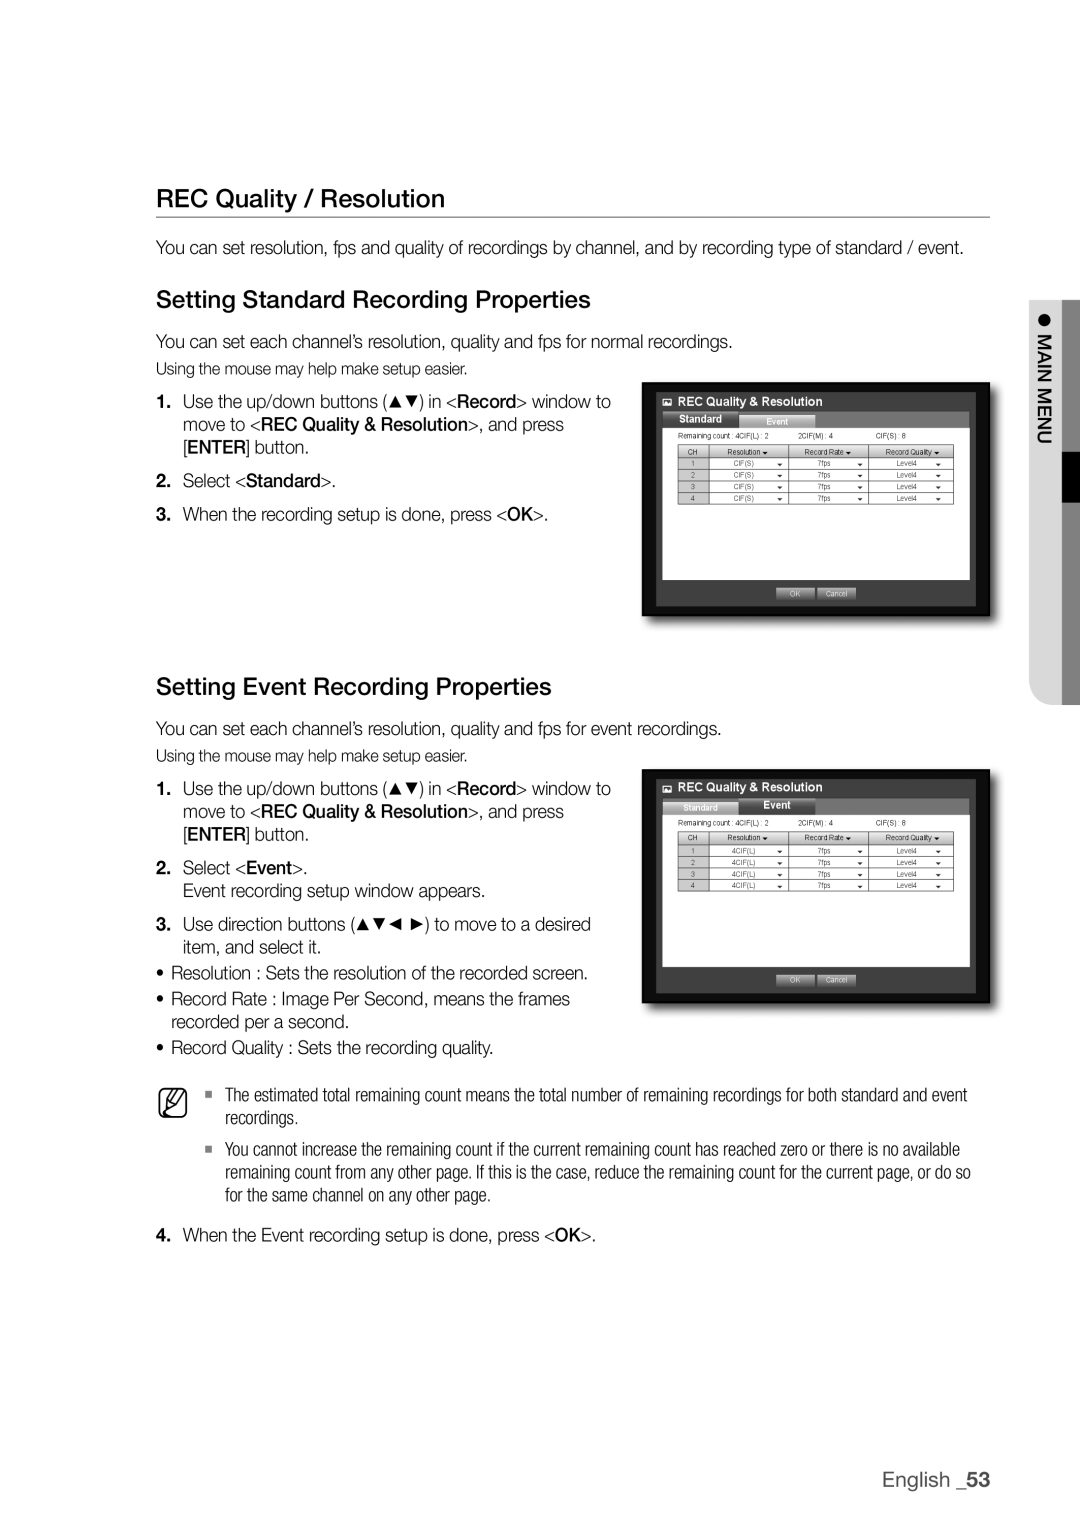 Samsung SDR3100 ReC Quality / Resolution, Setting Standard Recording Properties, Setting event Recording Properties 